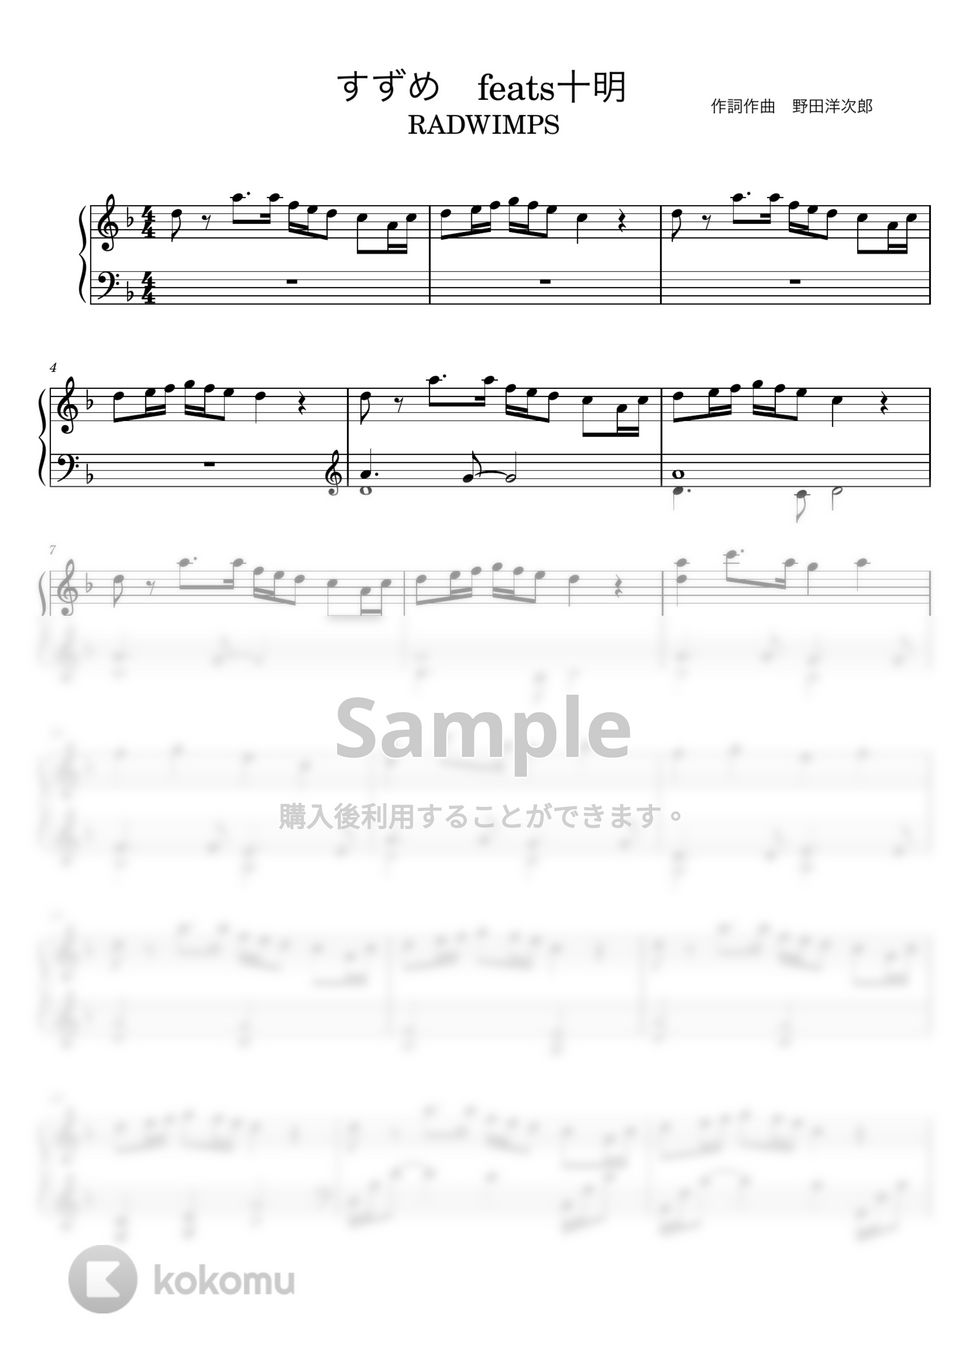 RADWIMPS - すずめfeats.十明 (ピアノソロ上級) by pianon